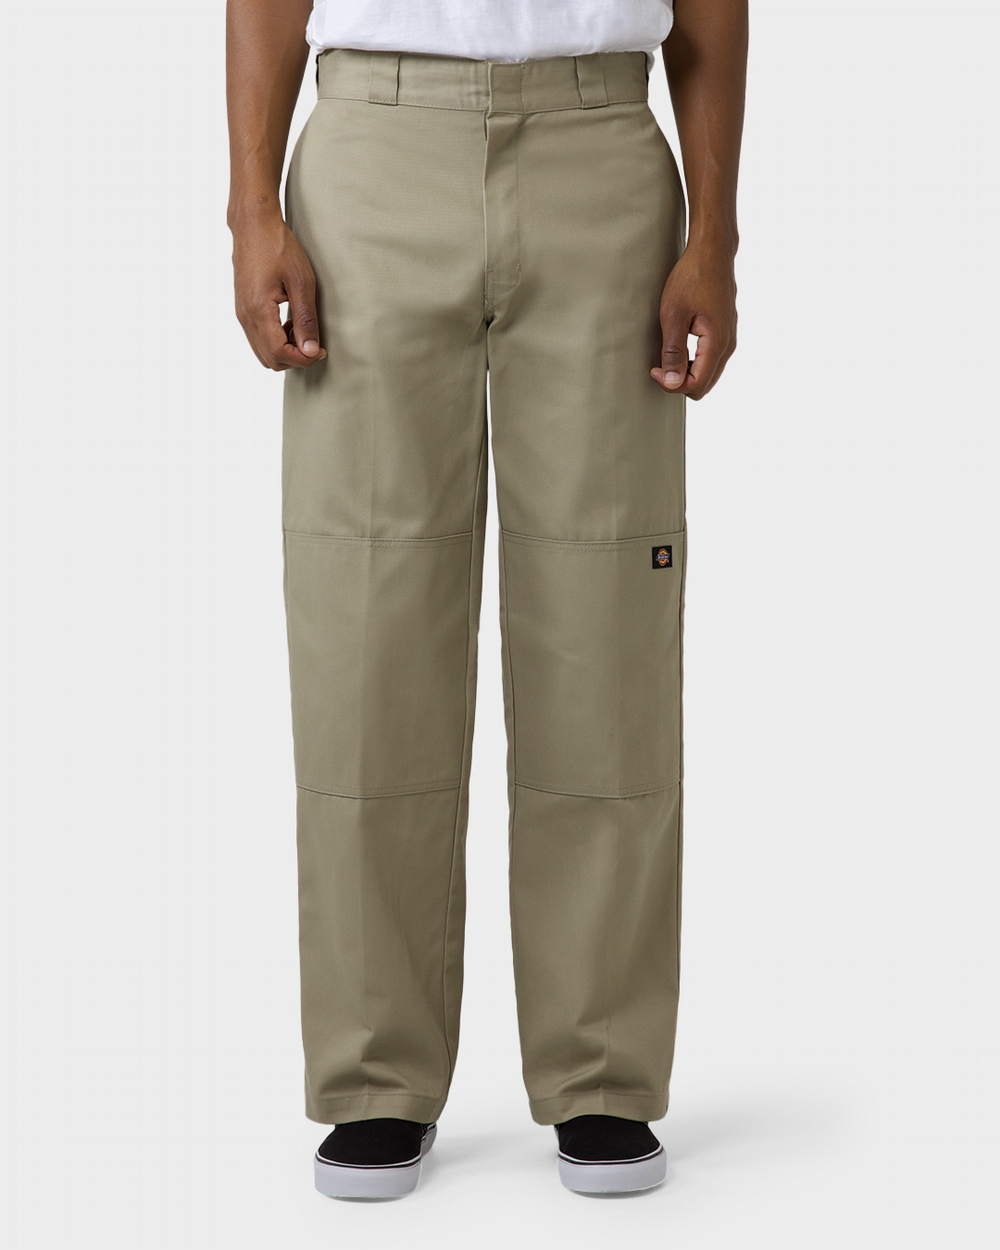 Dickies Mens Original 874® Work Pants Khaki Size 56x32 New | eBay